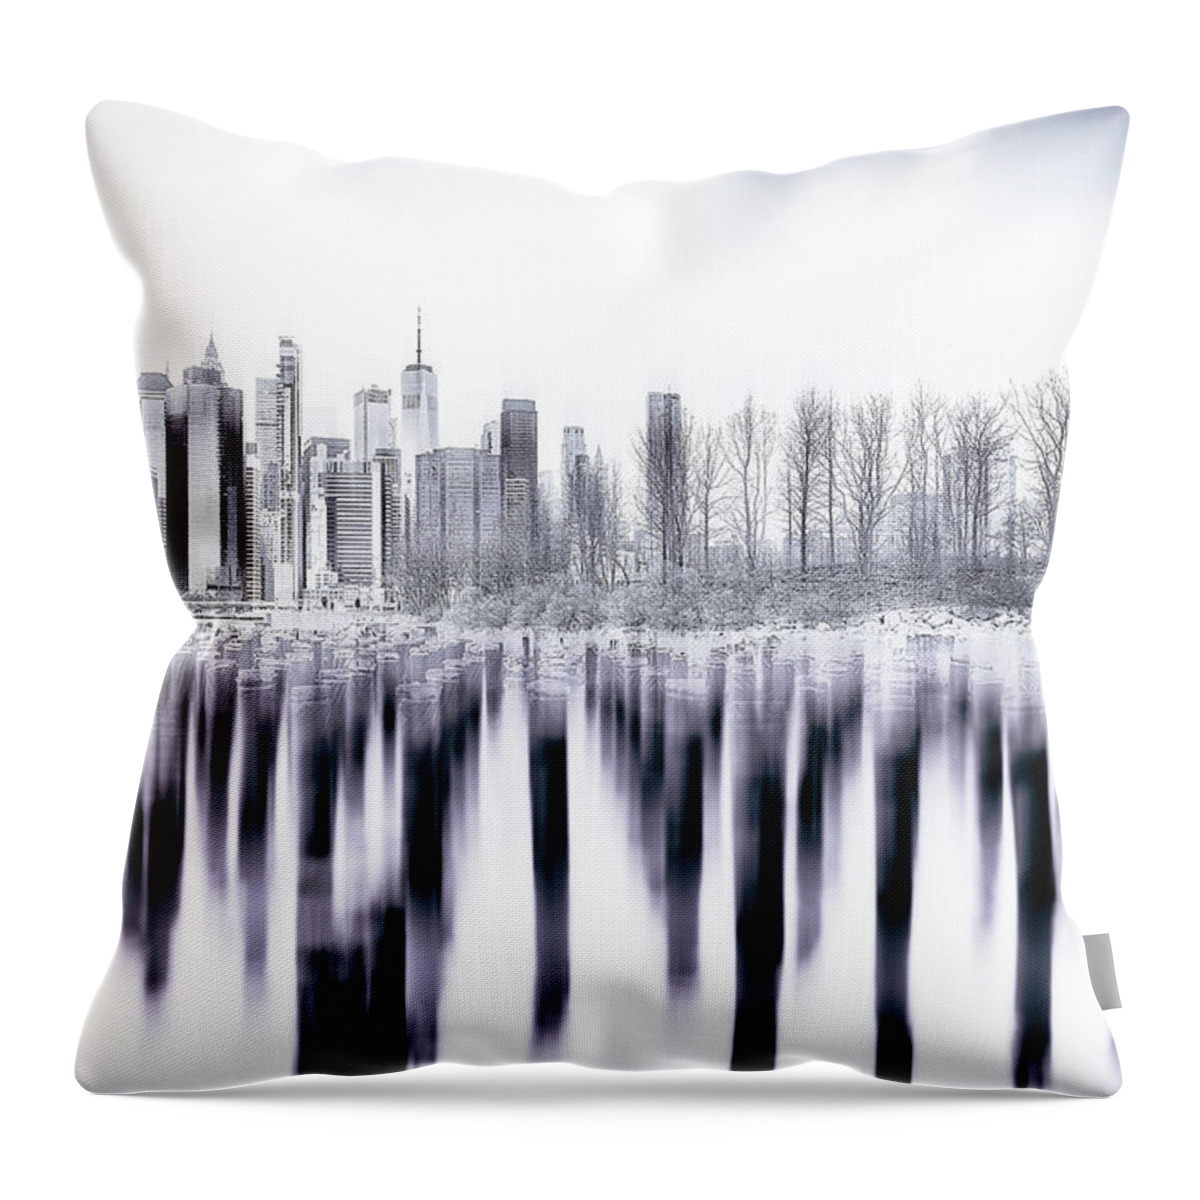 Estock Throw Pillow featuring the digital art New York City, Downtown Manhattan Seen From Brooklyn #5 by Lumiere